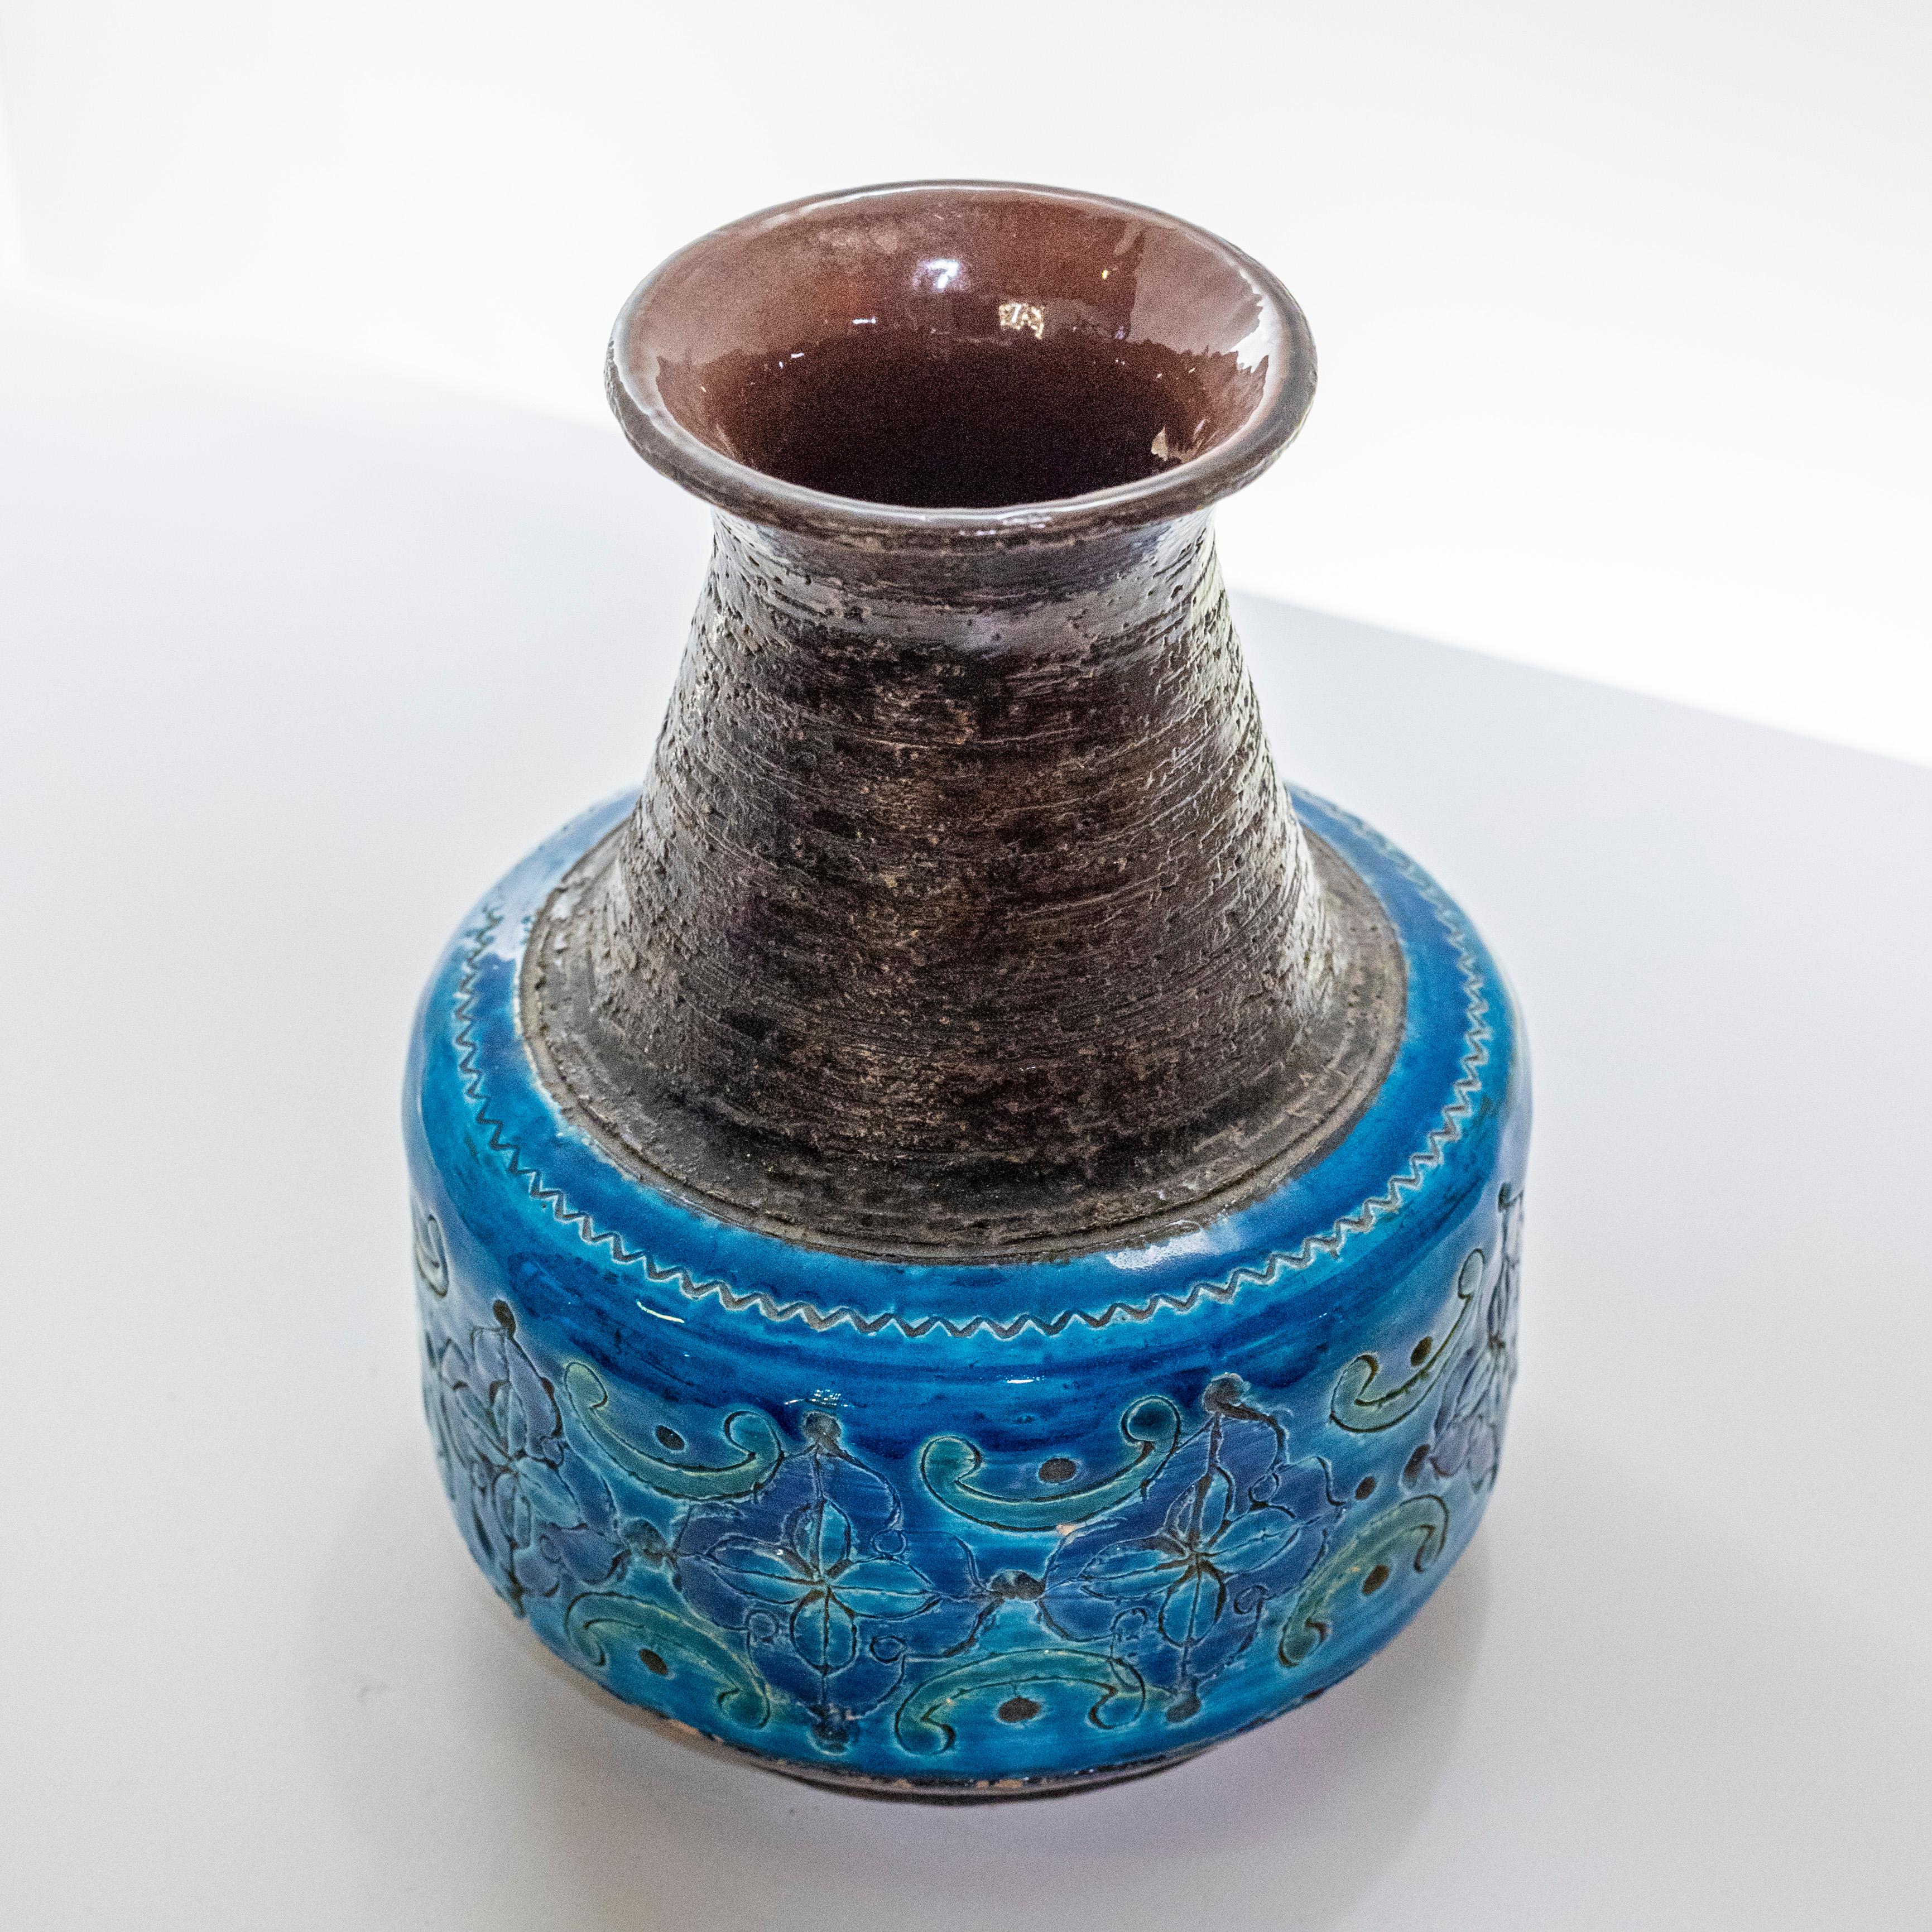 Arabesque ceramic vase by Aldo Londi from Bitossi Italy 1960s.